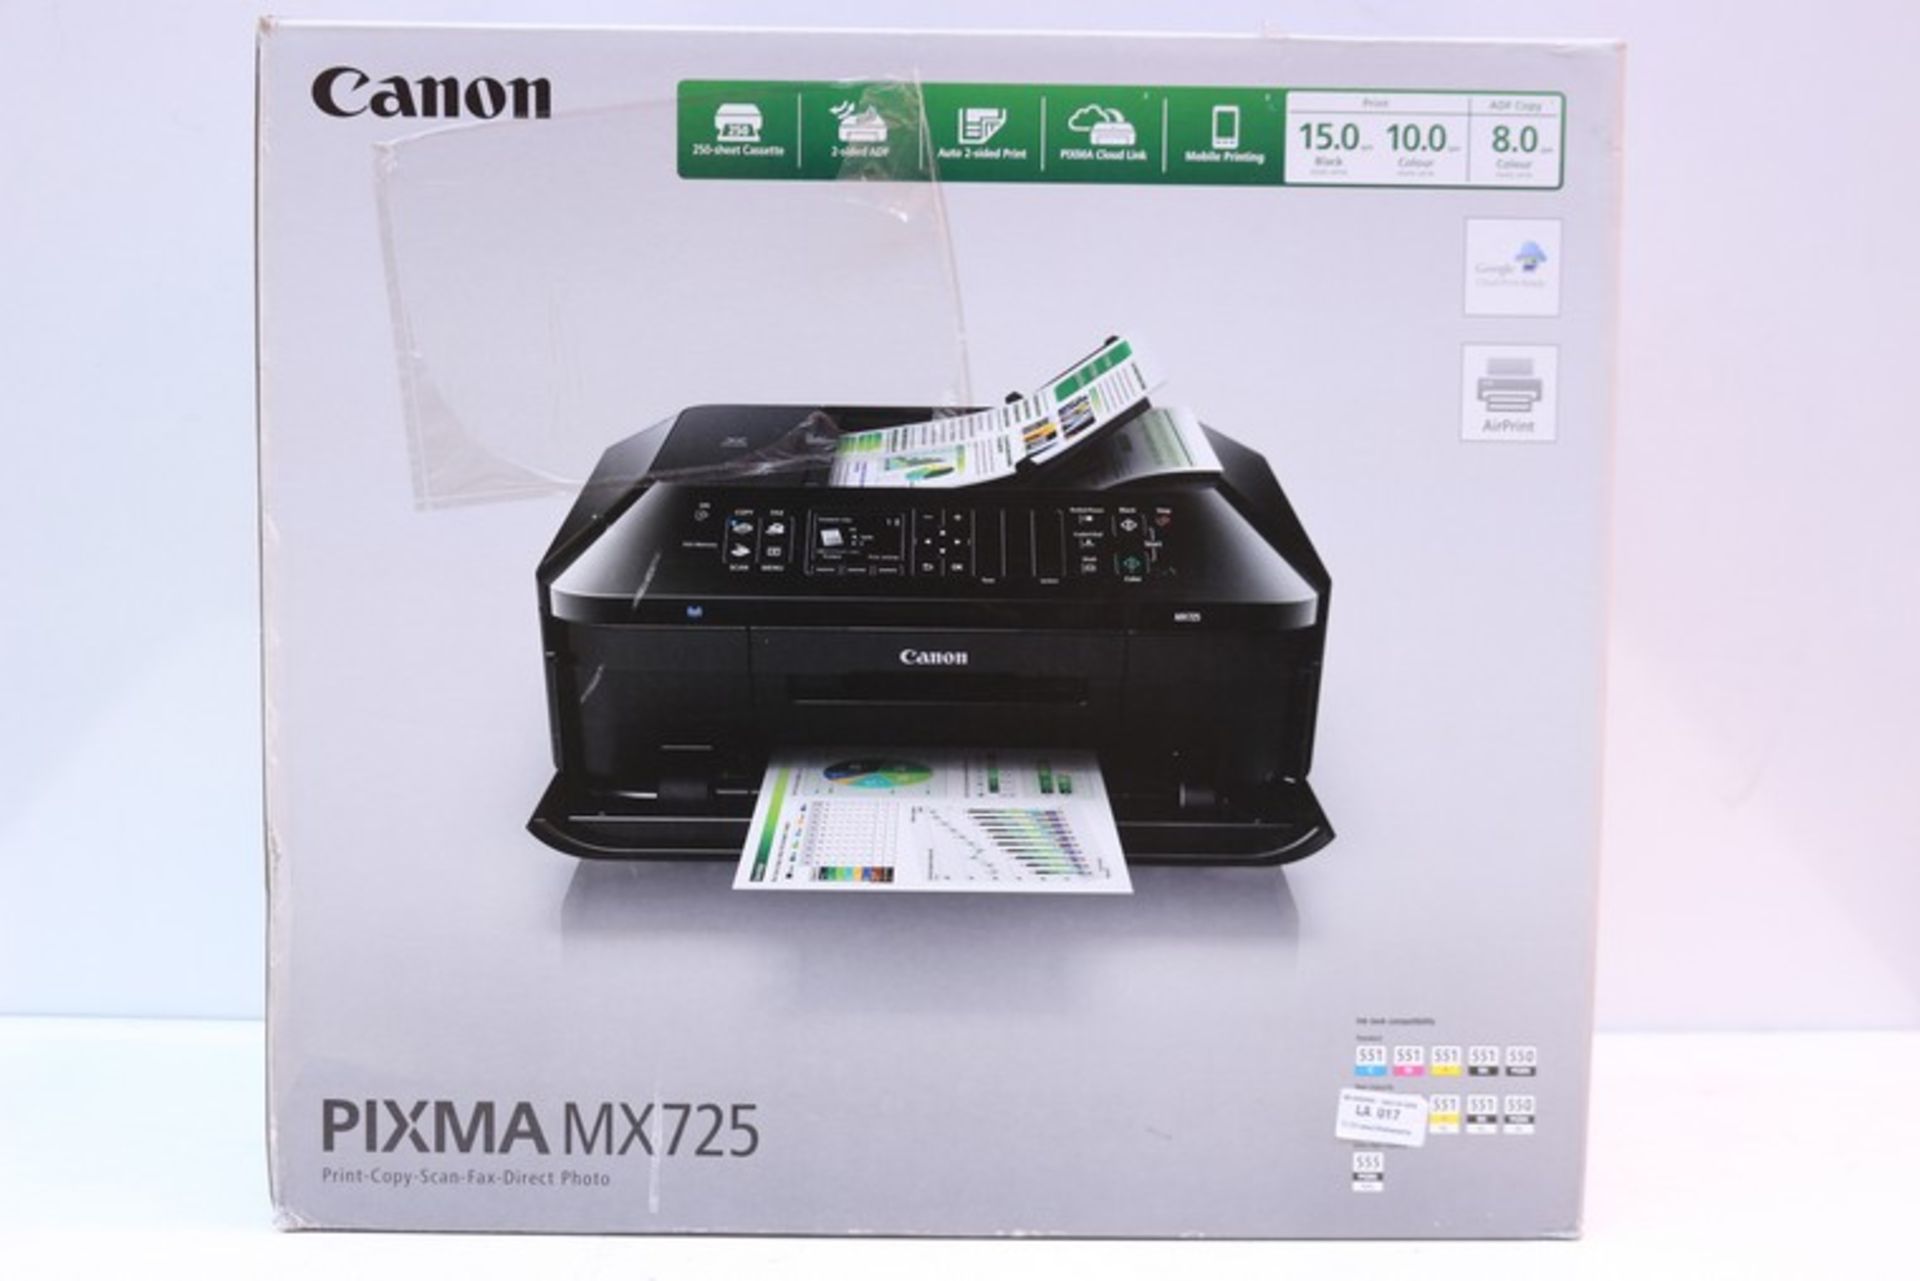 1 x BOXED CANON PIXMA MX725 PRINTER SCANNER COPIER RRP £150 (5.5.17) *PLEASE NOTE THAT THE BID PRICE